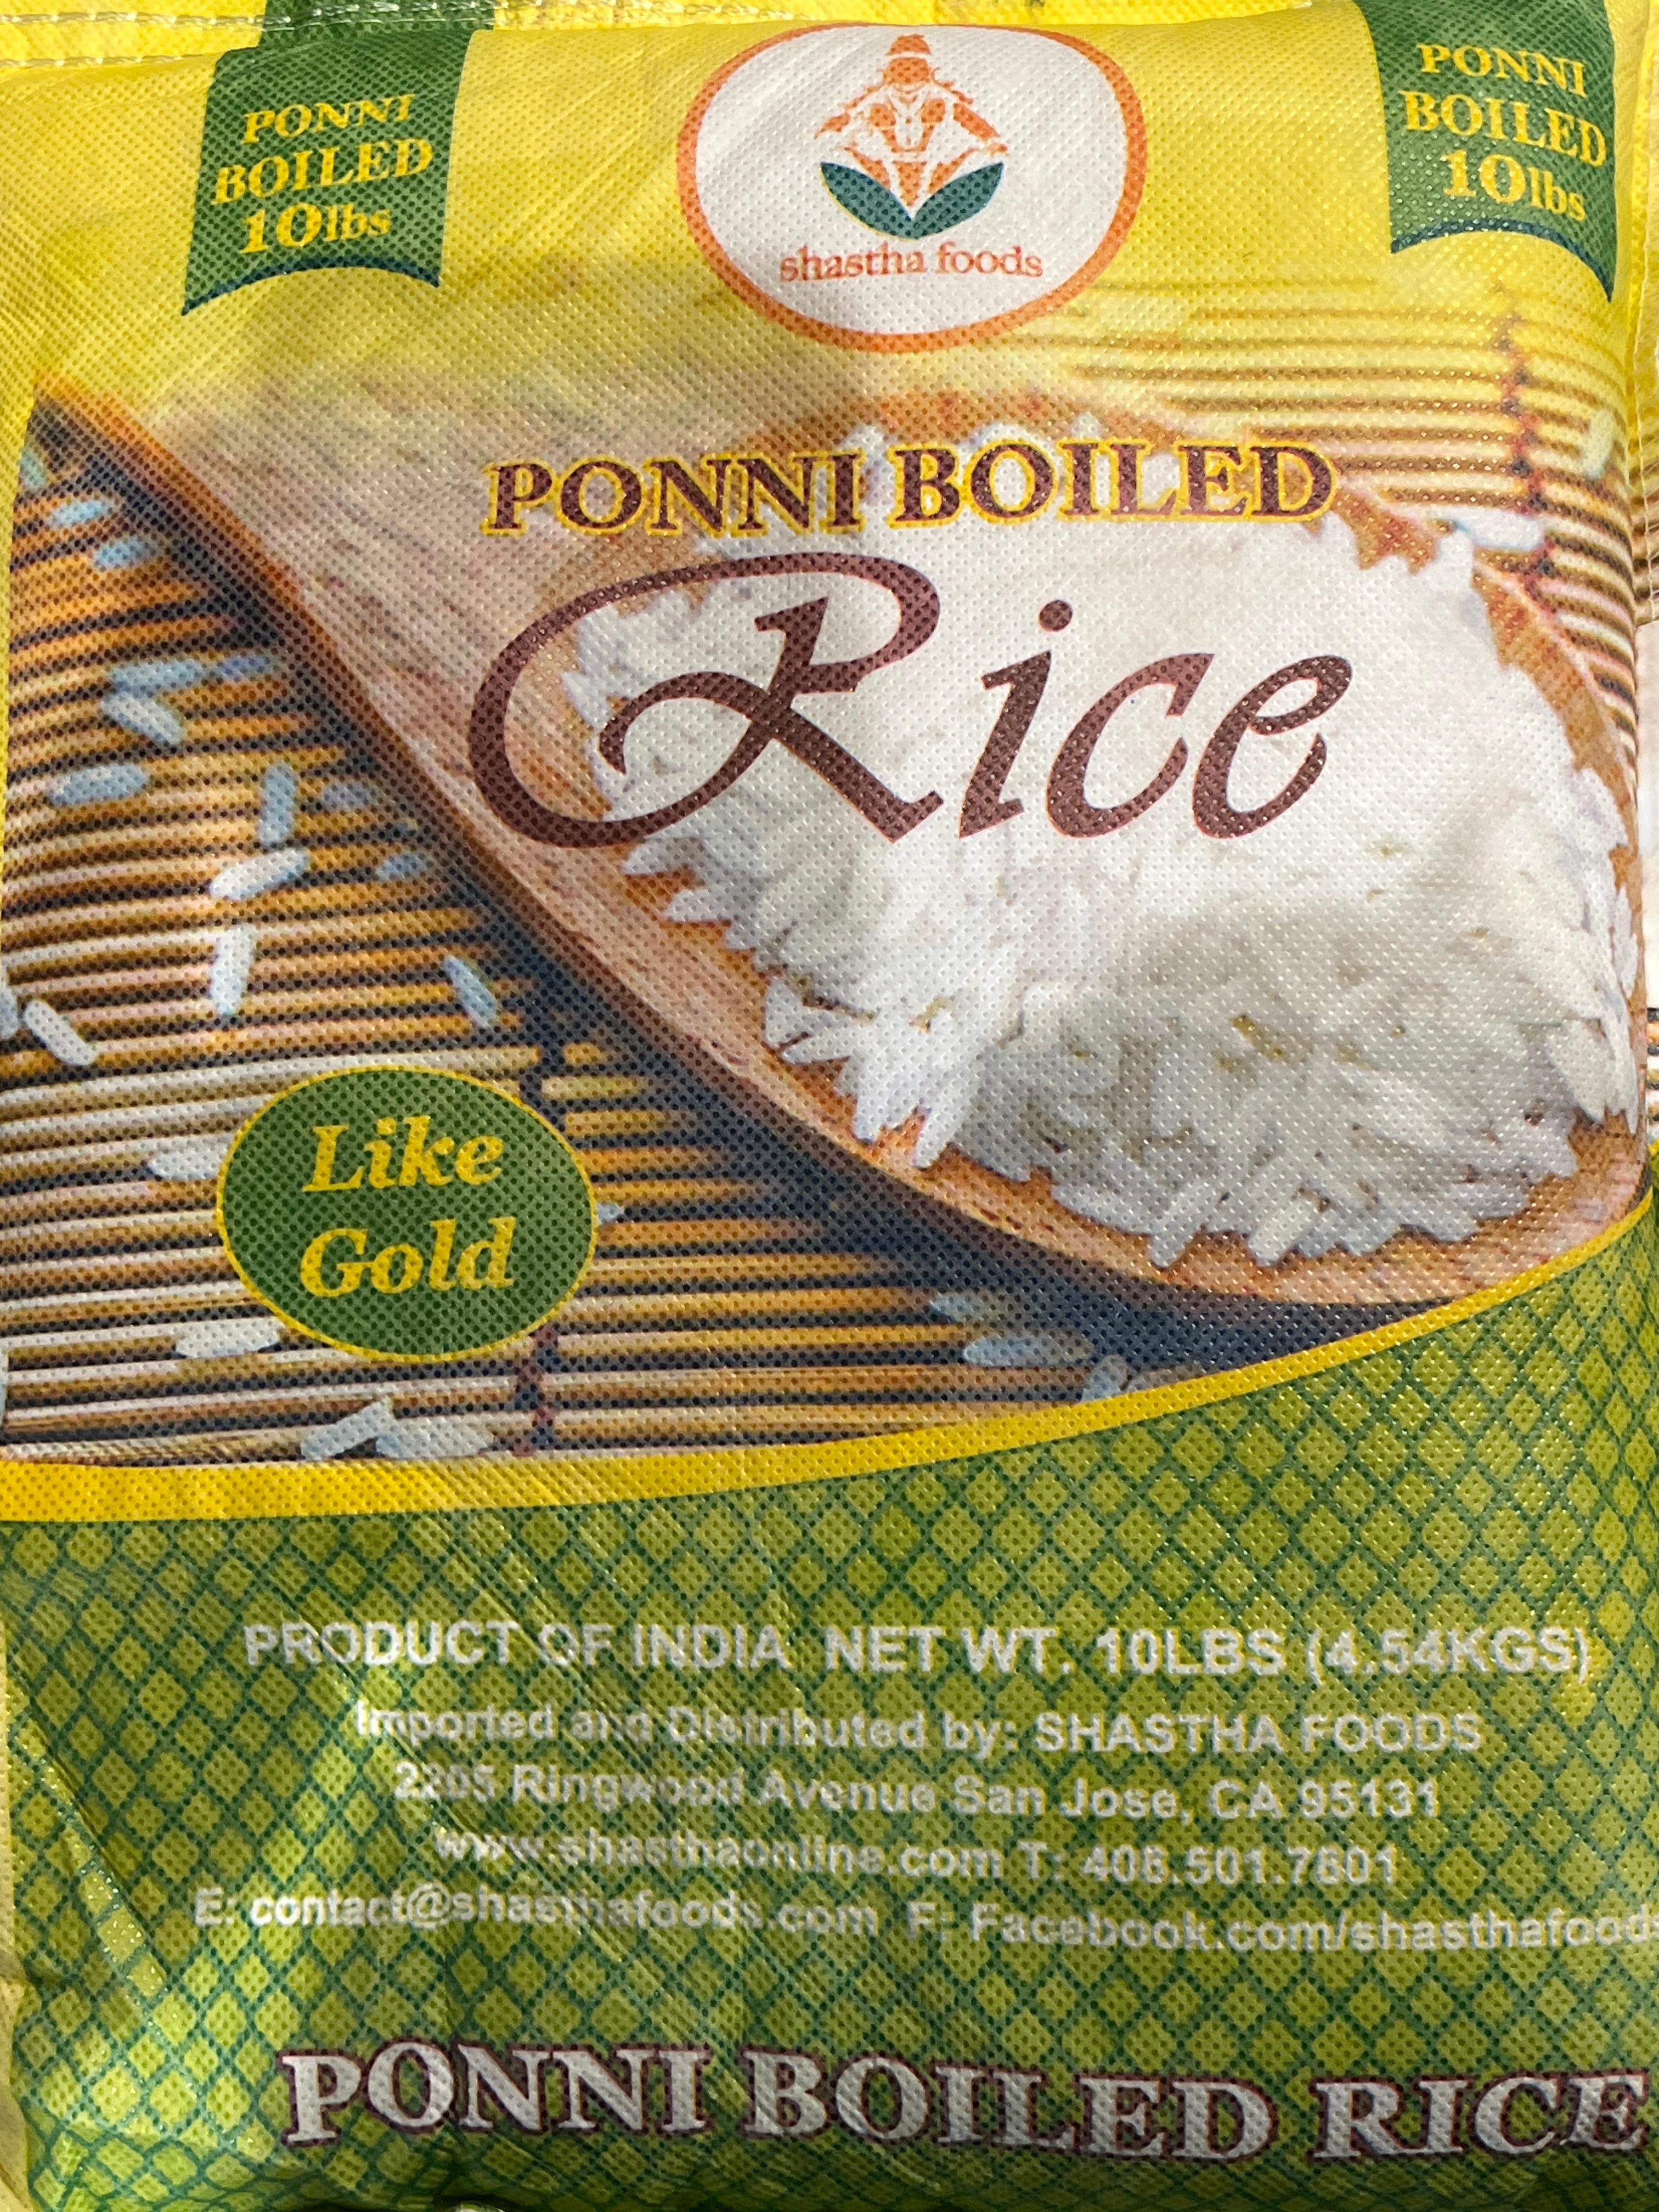 Shastha foods ponni boiled rice 10 lb